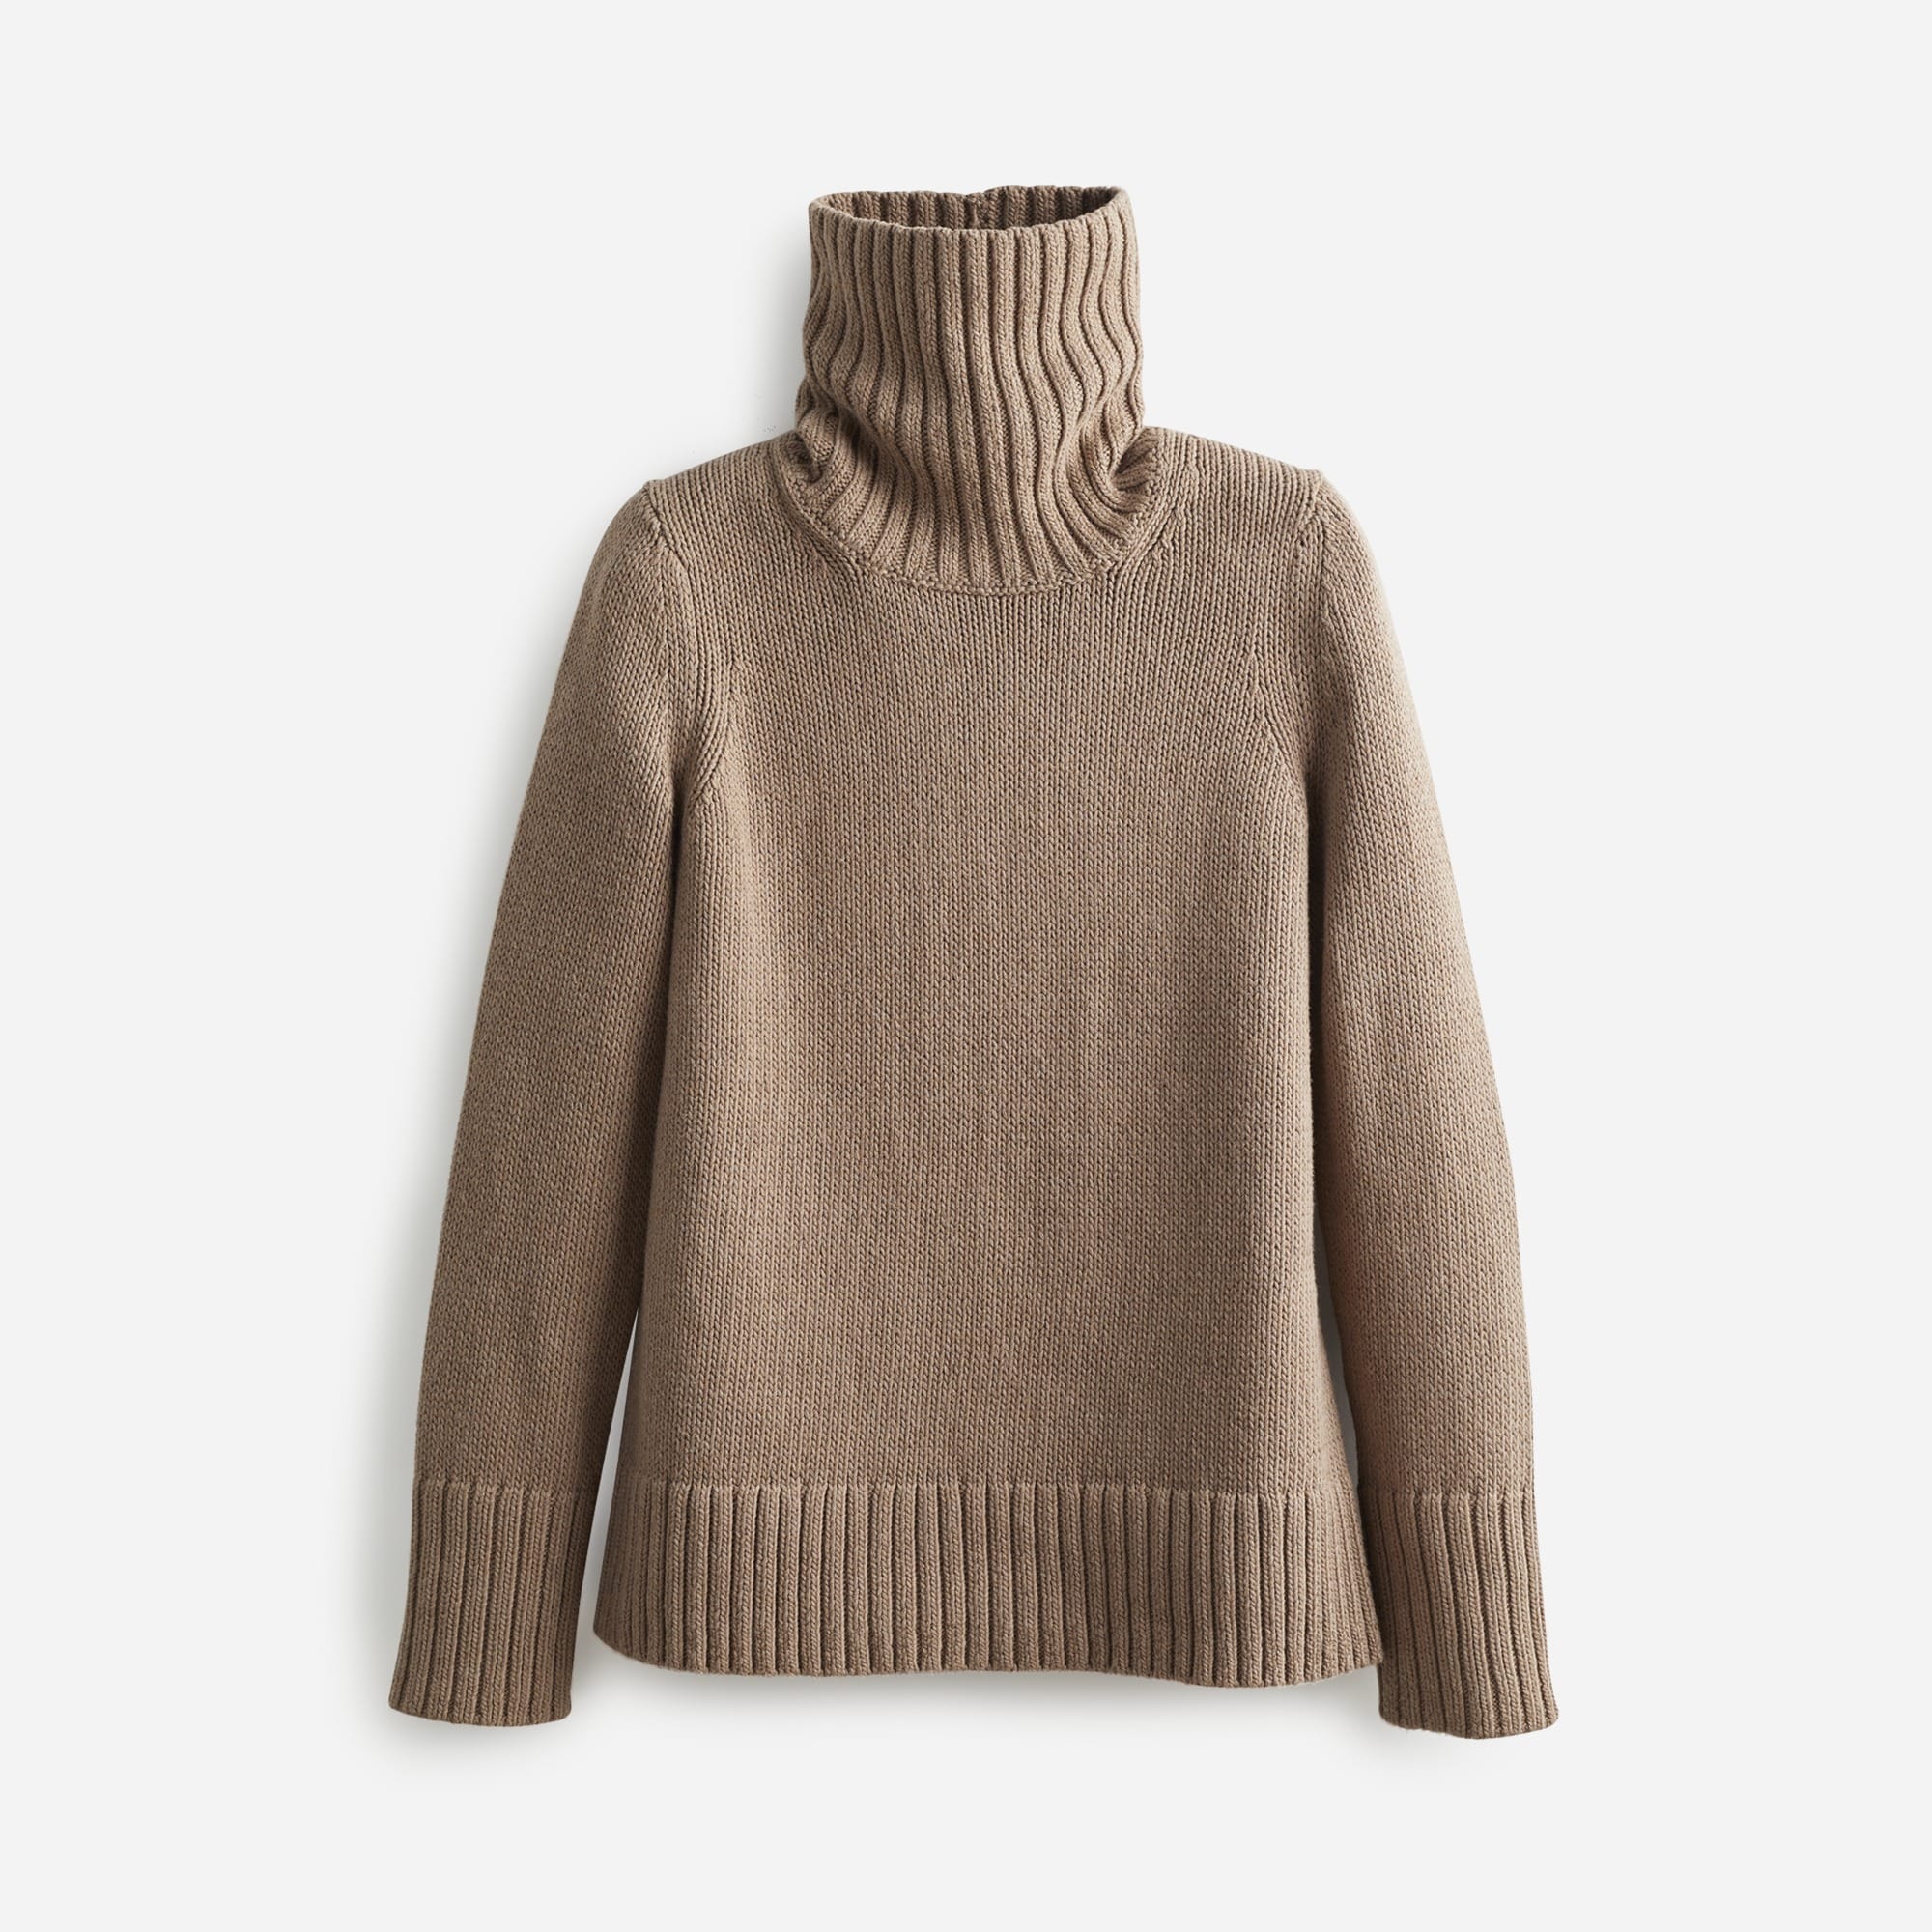  State of Cotton NYC Wynn sweater